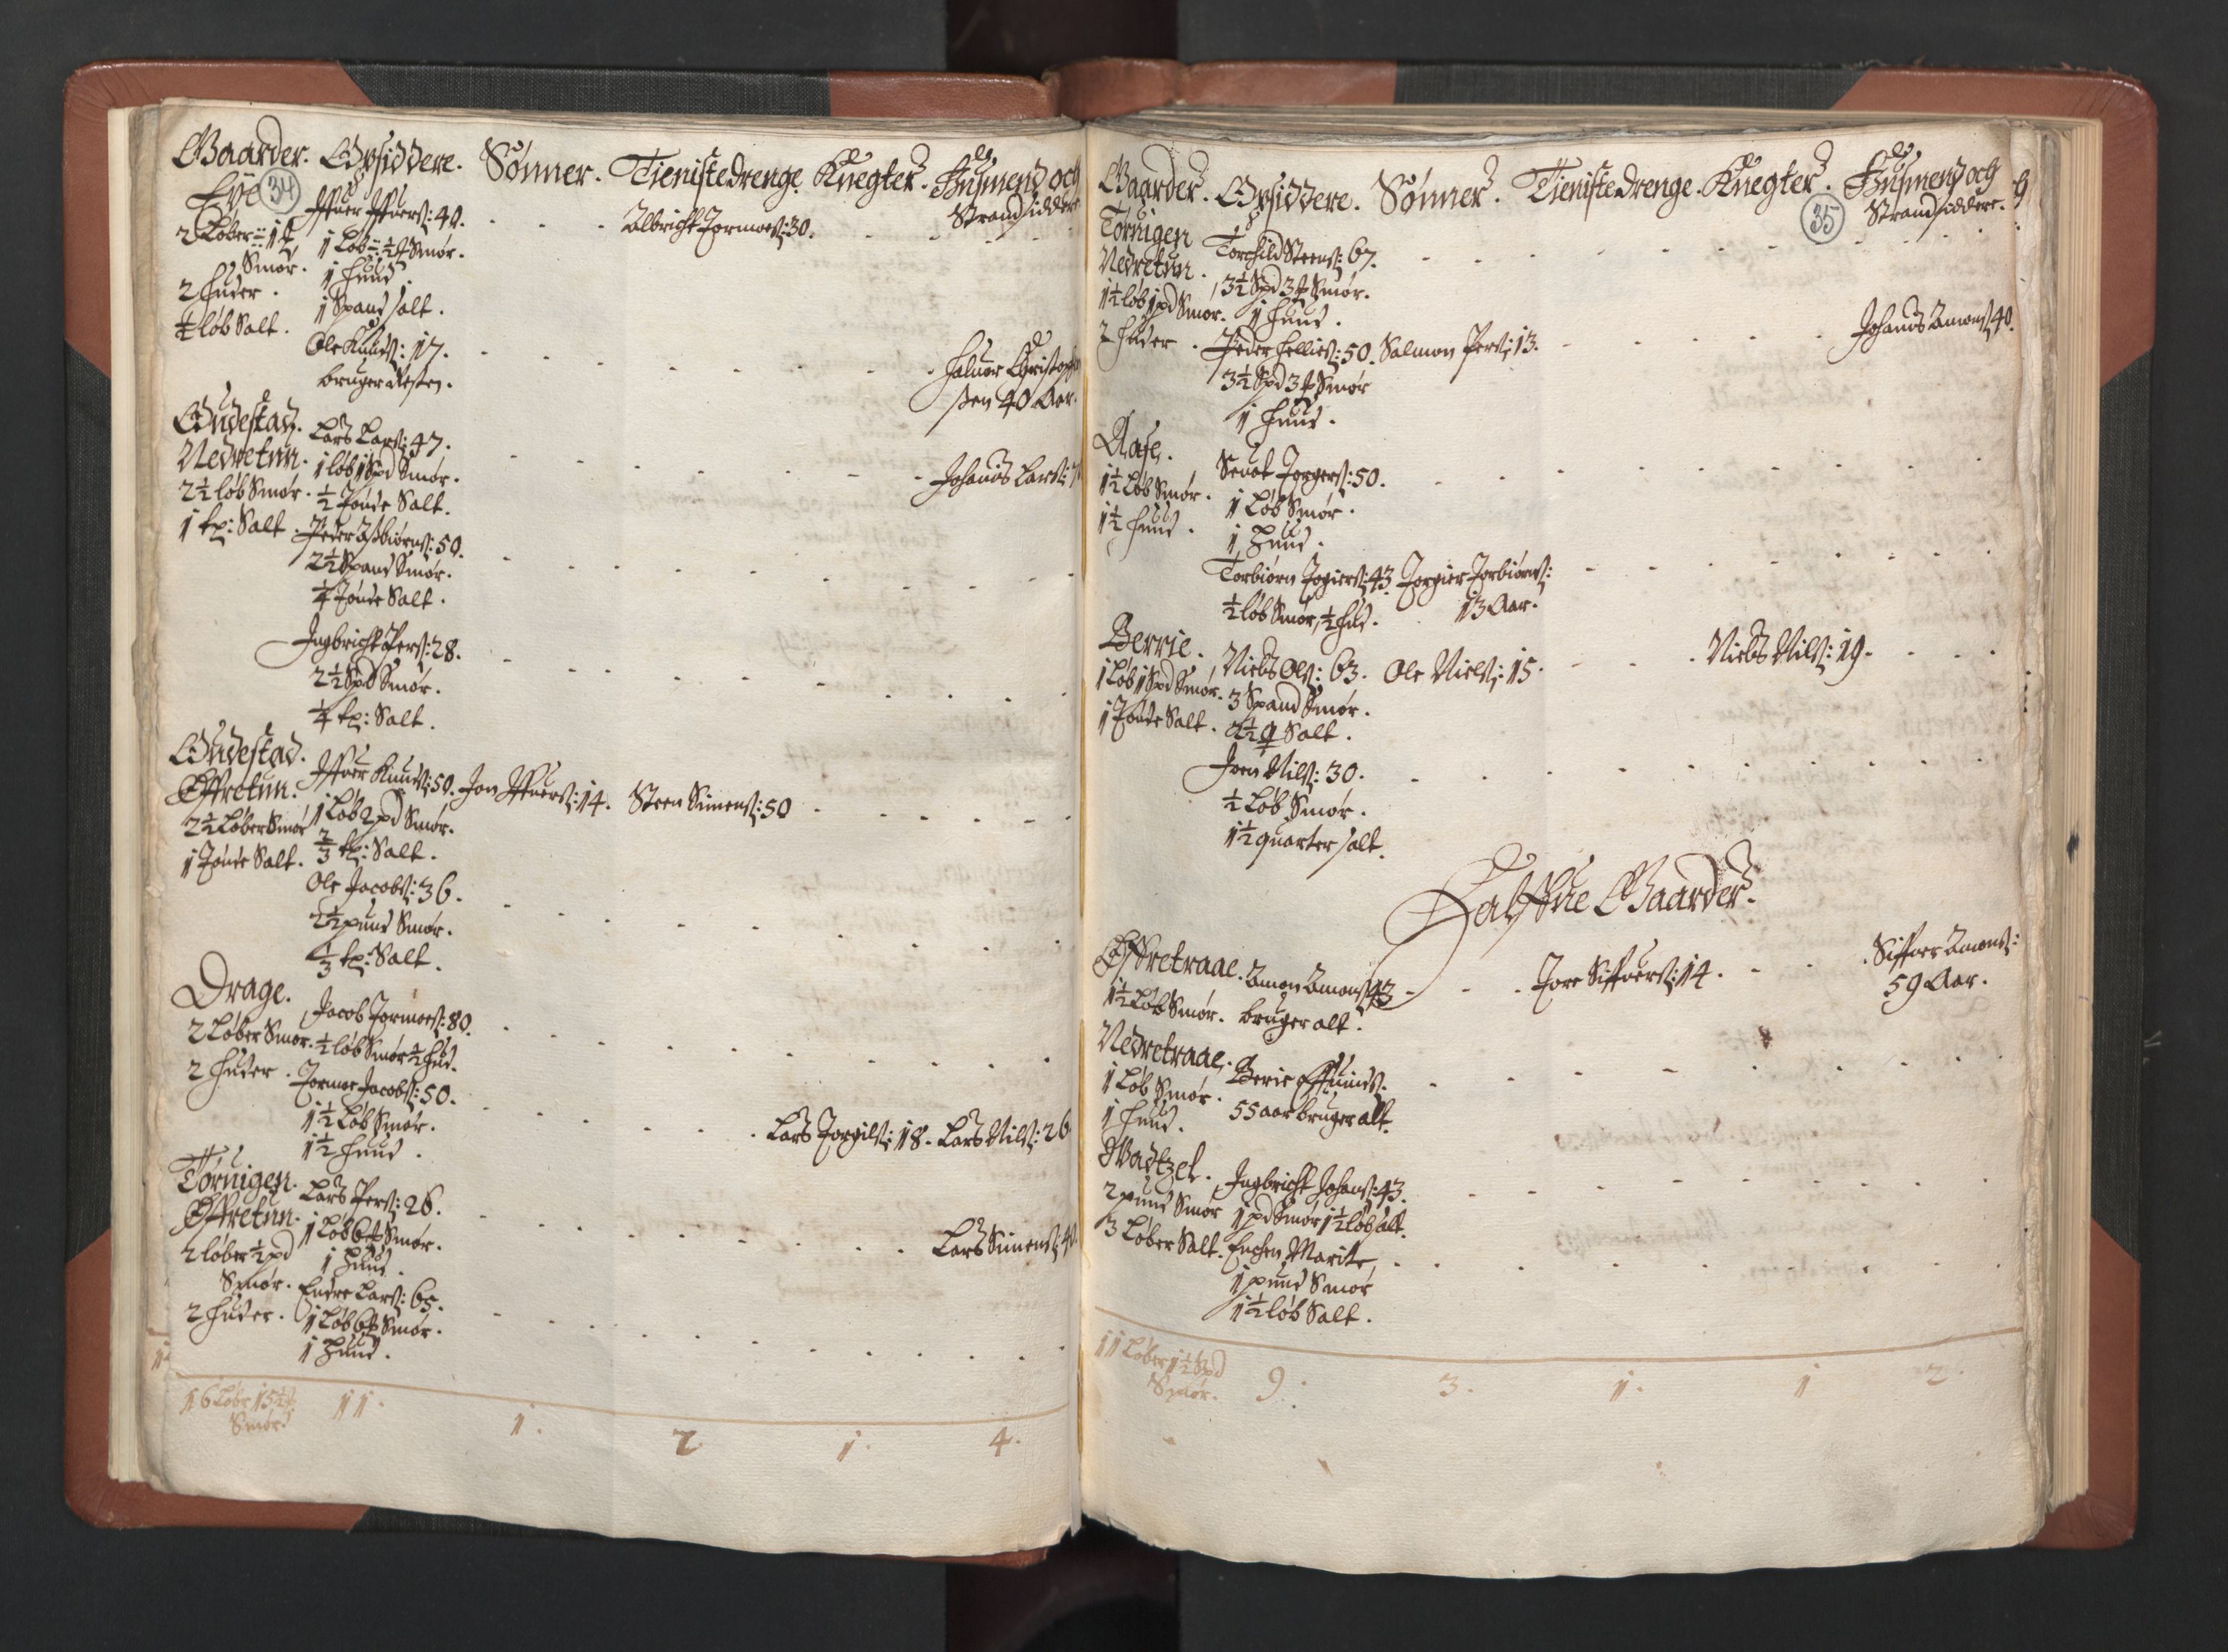 RA, Fogdenes og sorenskrivernes manntall 1664-1666, nr. 14: Hardanger len, Ytre Sogn fogderi og Indre Sogn fogderi, 1664-1665, s. 34-35